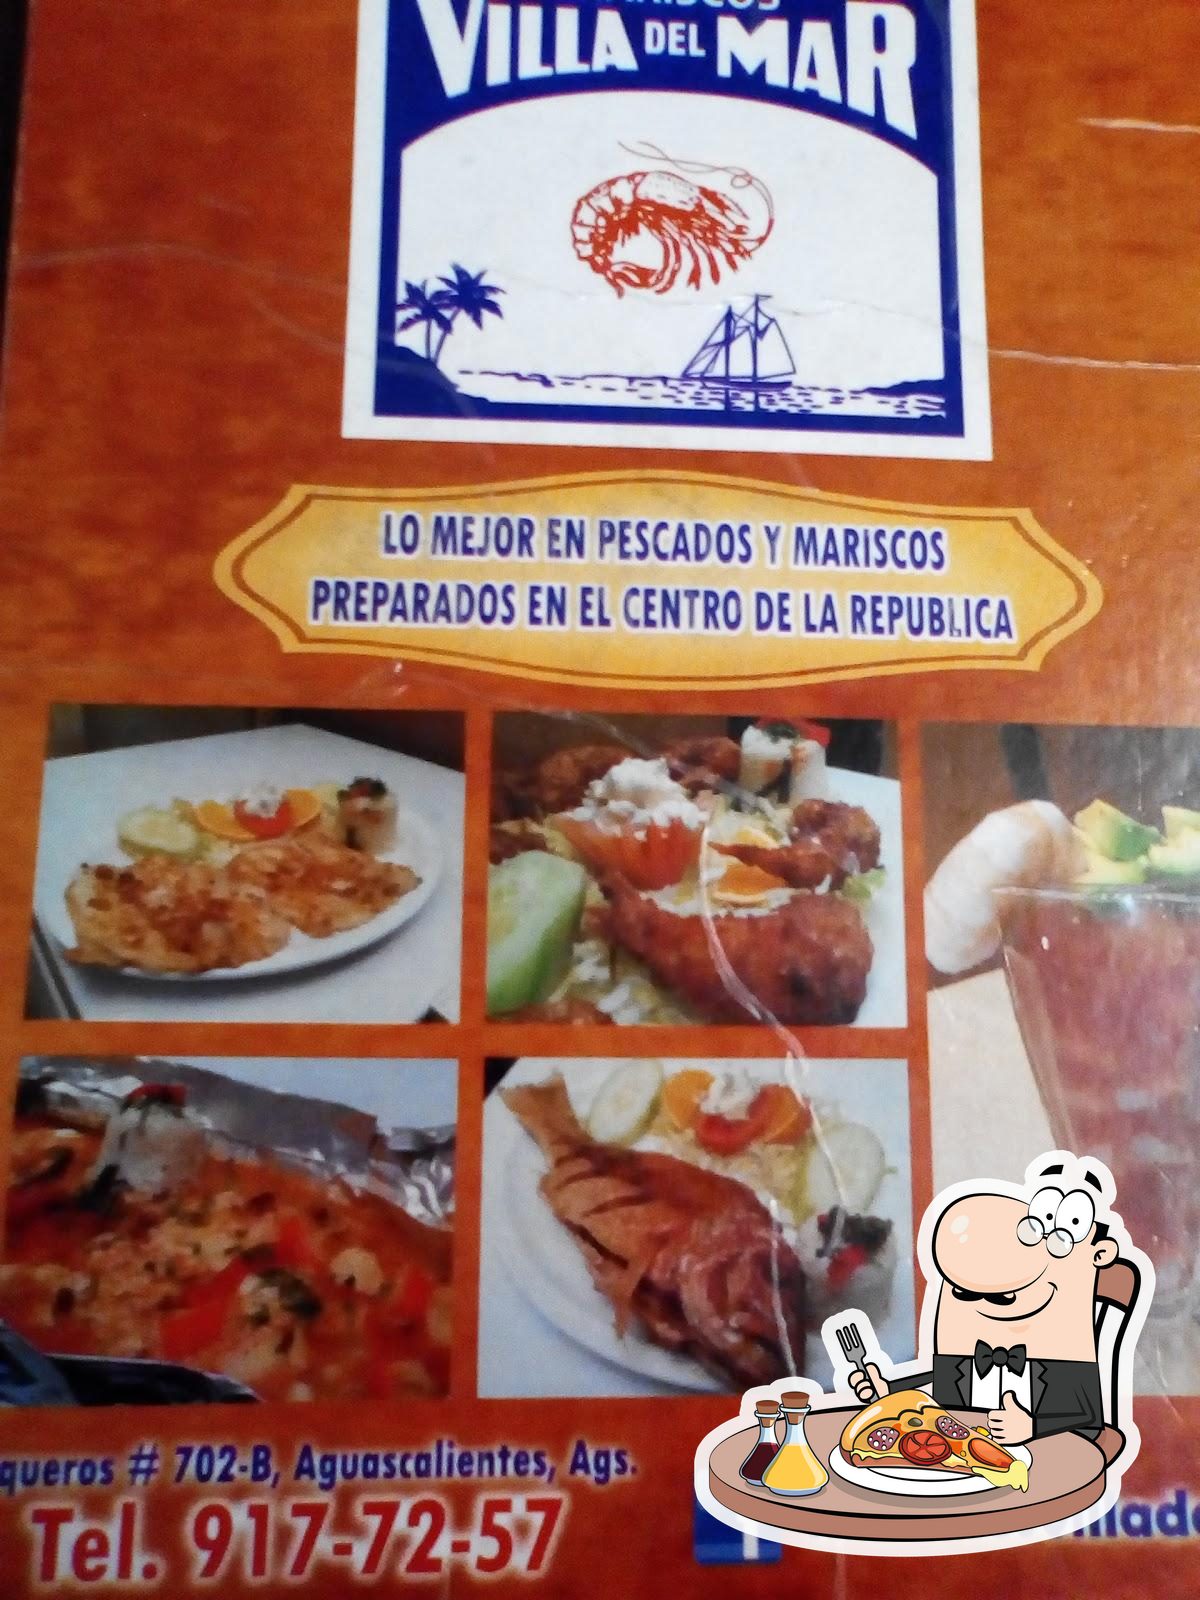 Mariscos Villa del Mar Arqueros, Aguascalientes, Av Arqueros 702-Local B -  Seafood restaurant menu and reviews